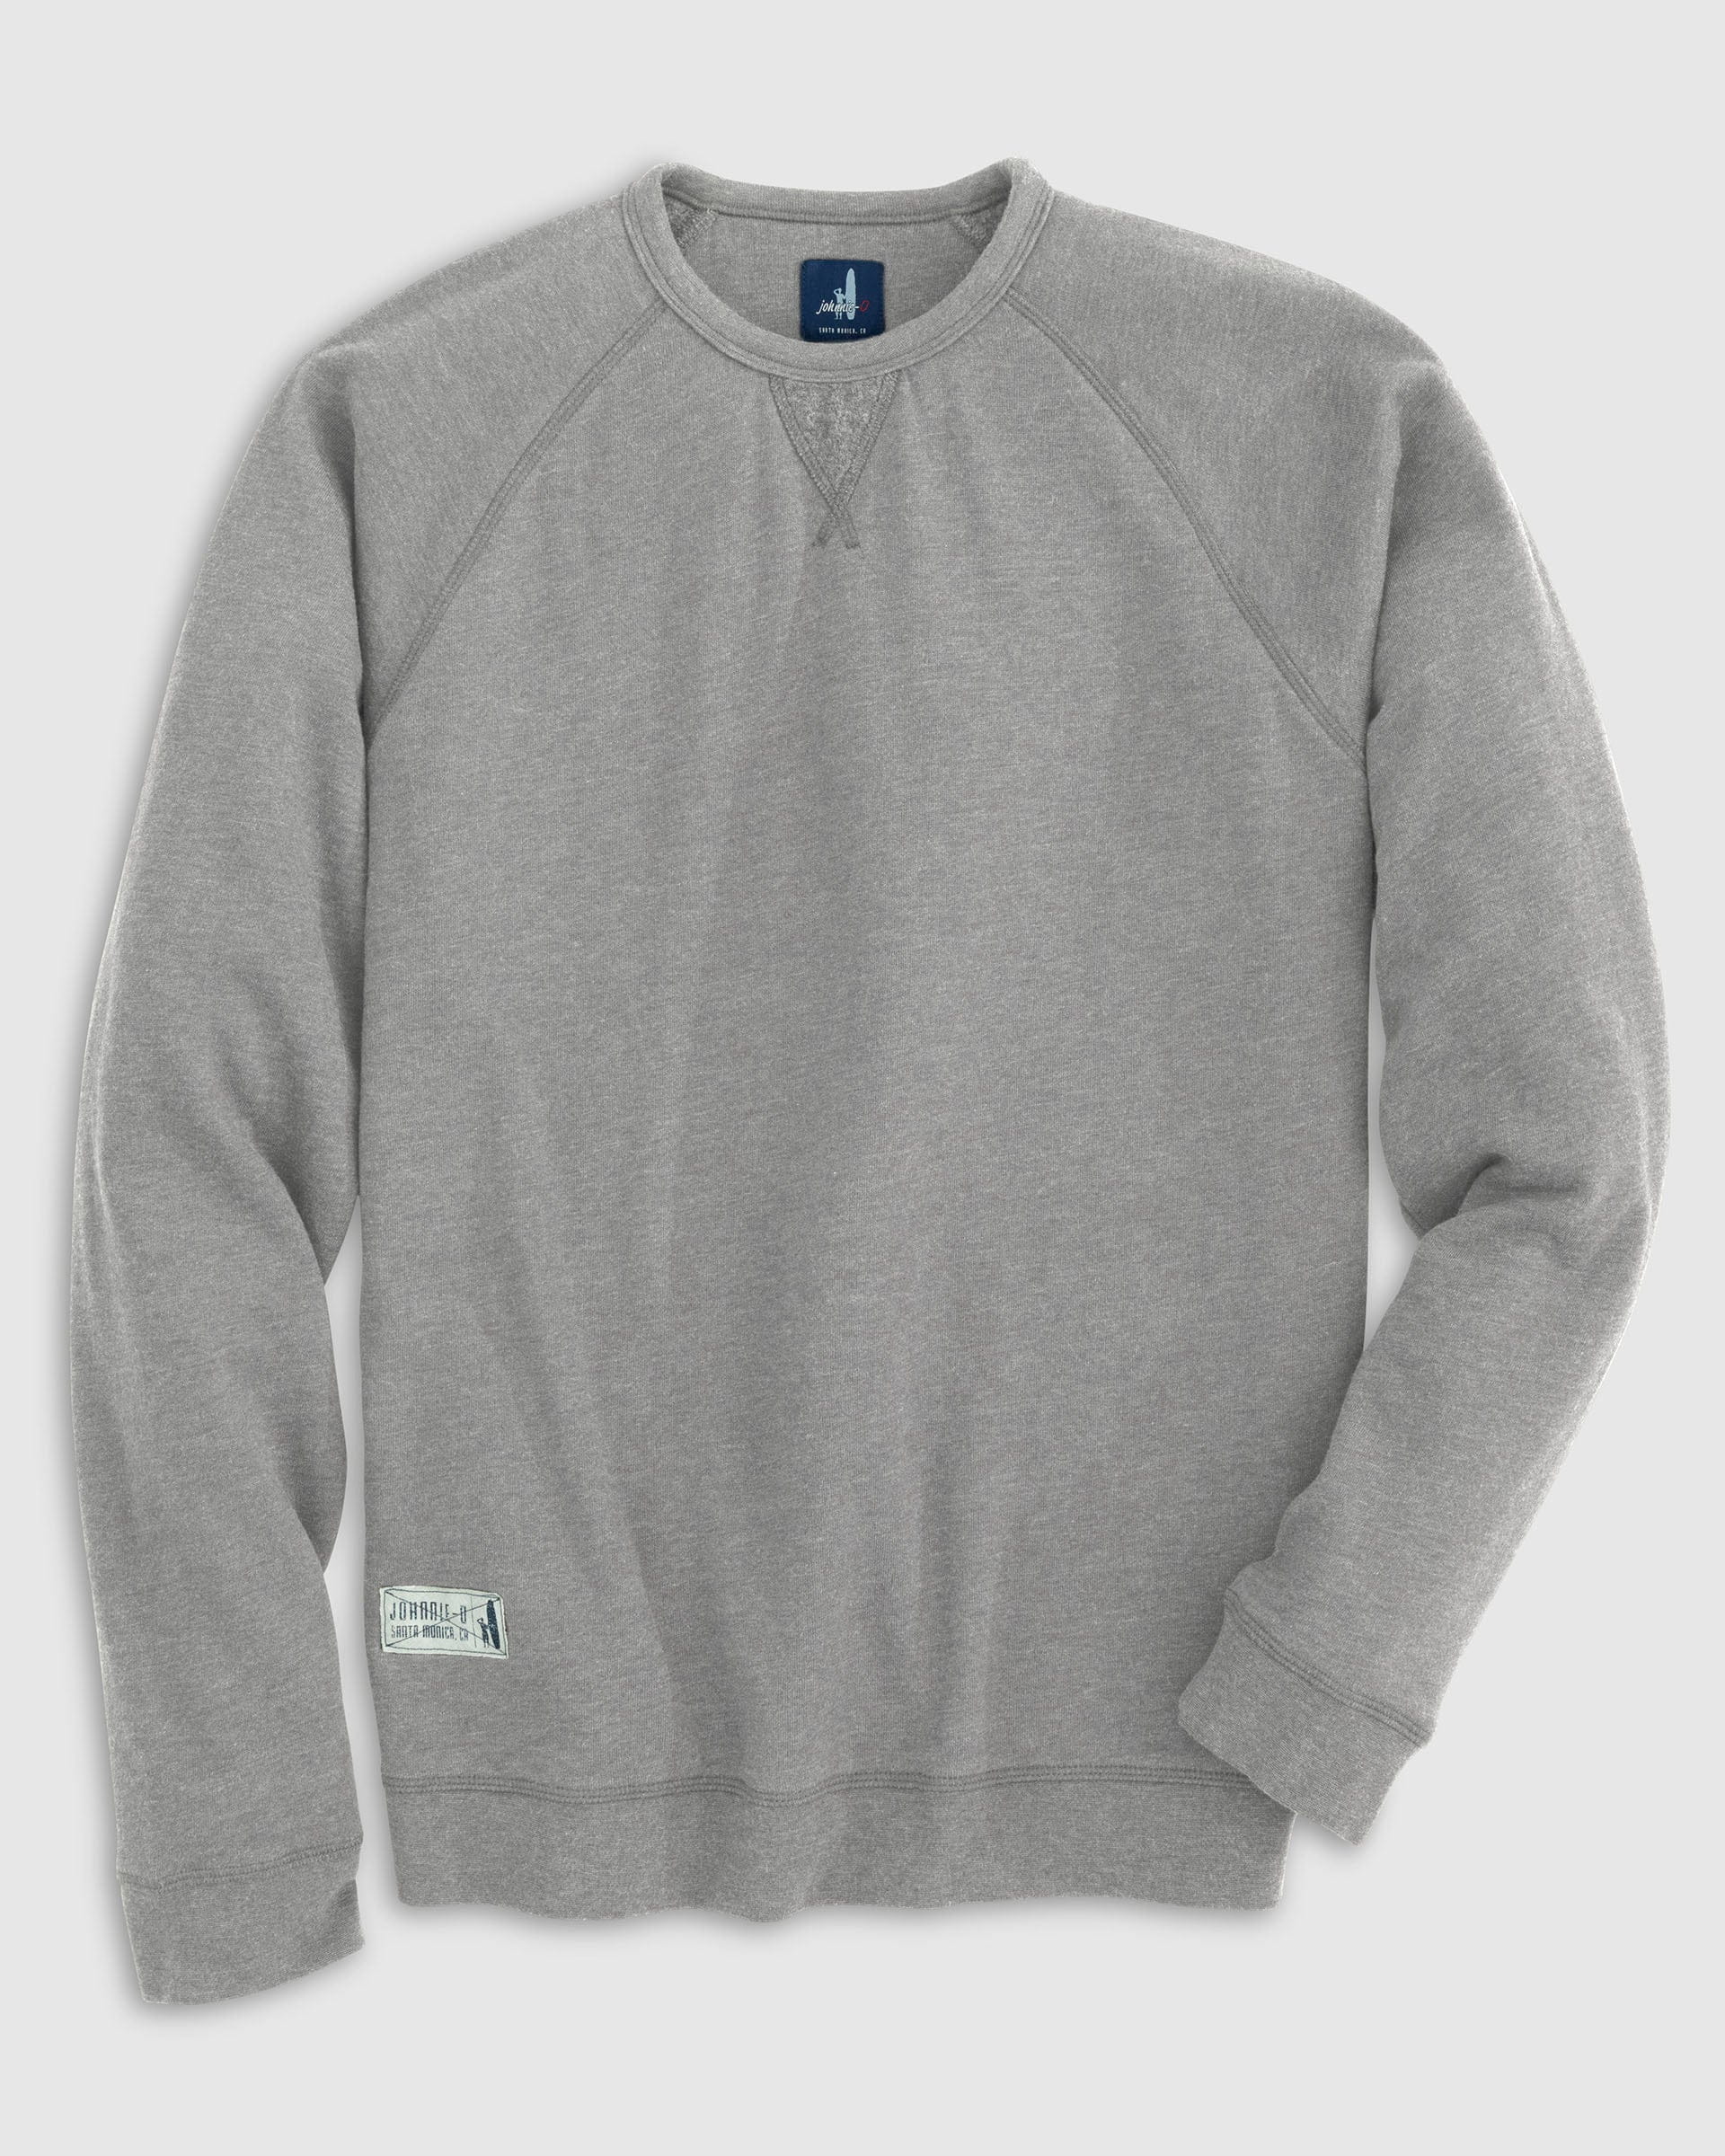 Boy's Raglan Style Crewneck Sweatshirt - Pamlico Jr · johnnie-O